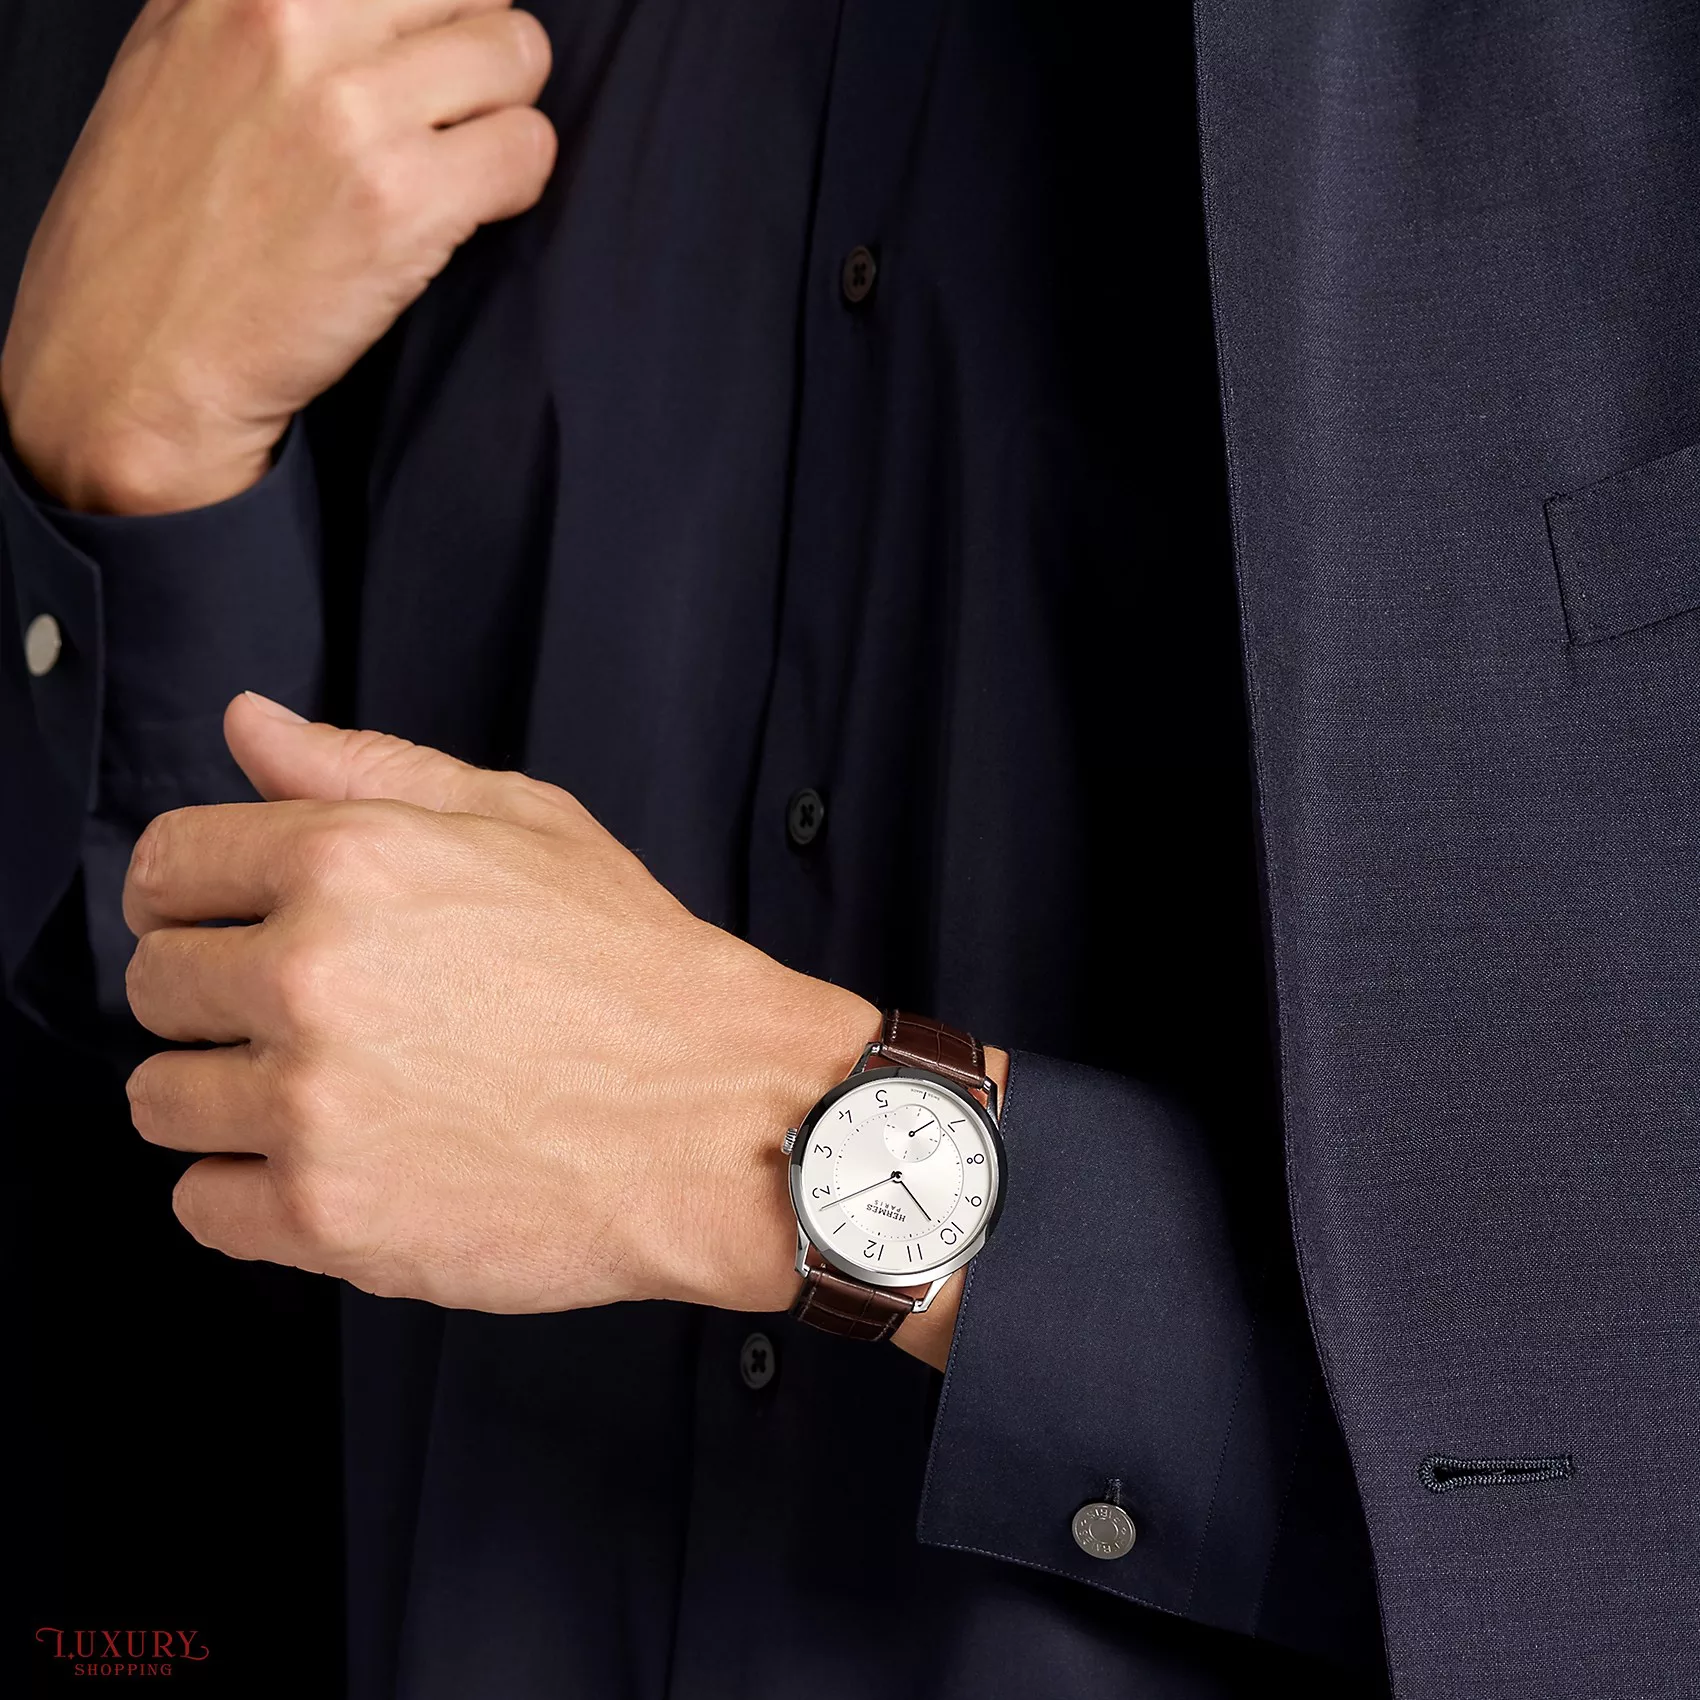 Hermes Slim d'Hermes W041759WW00 Watch 39.5mm